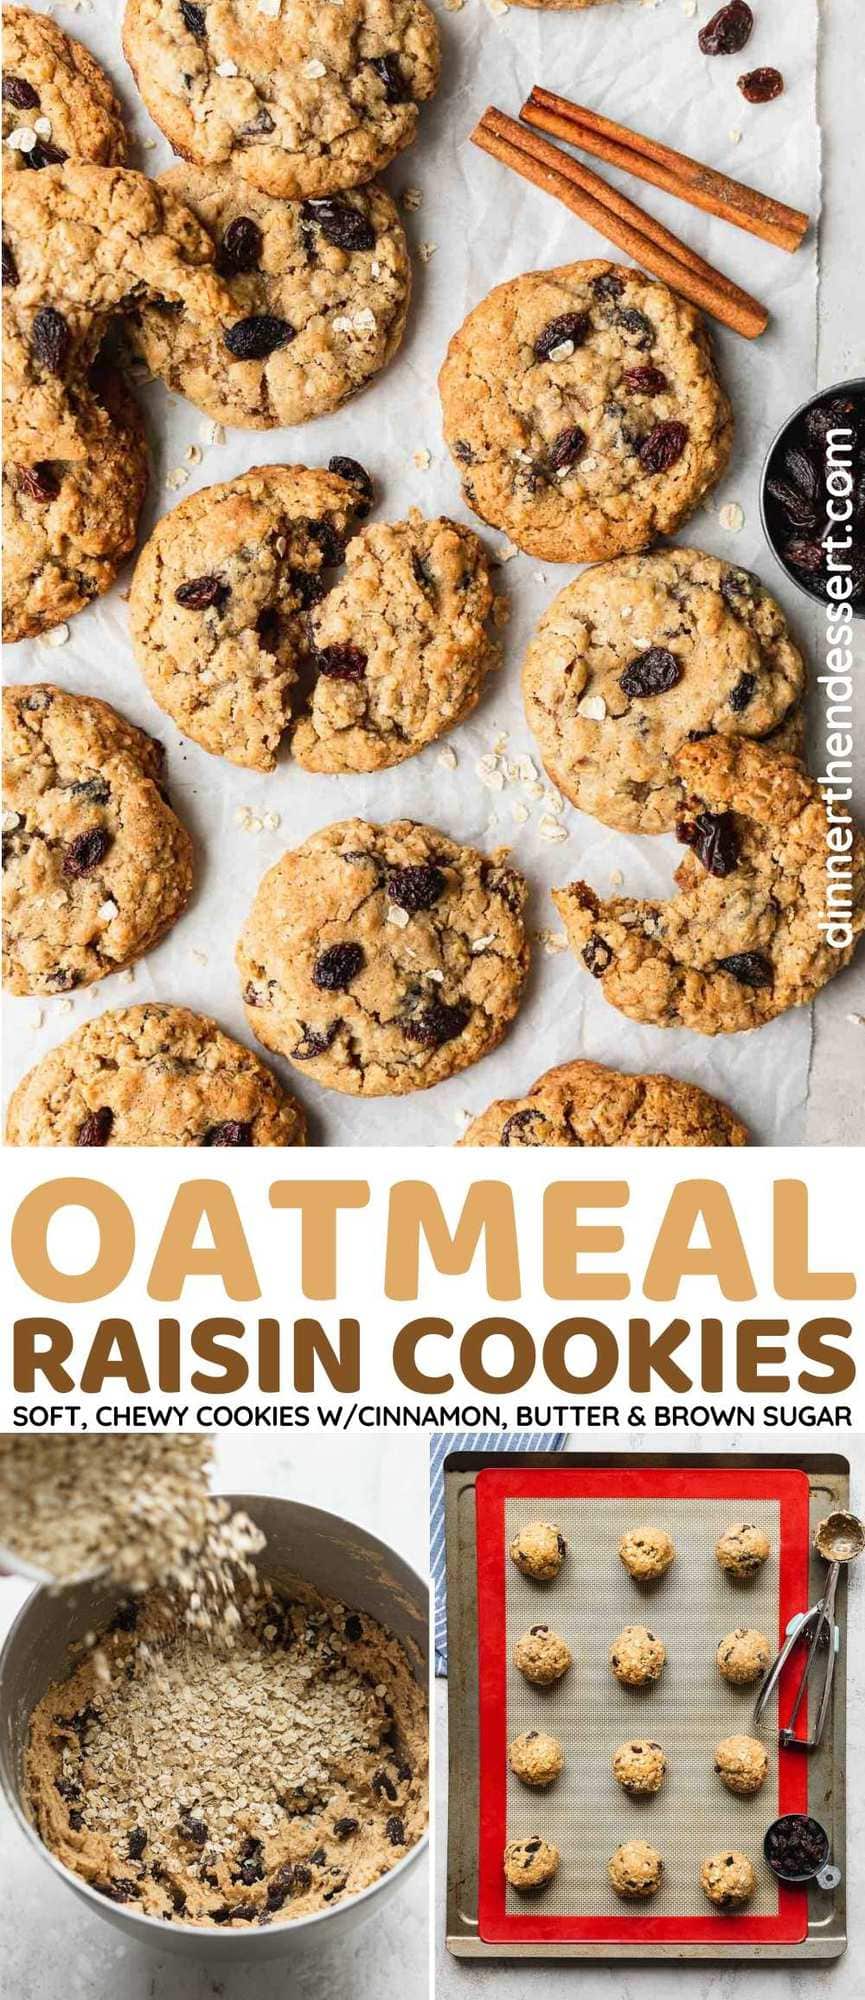 Oatmeal Raisin Cookies collage